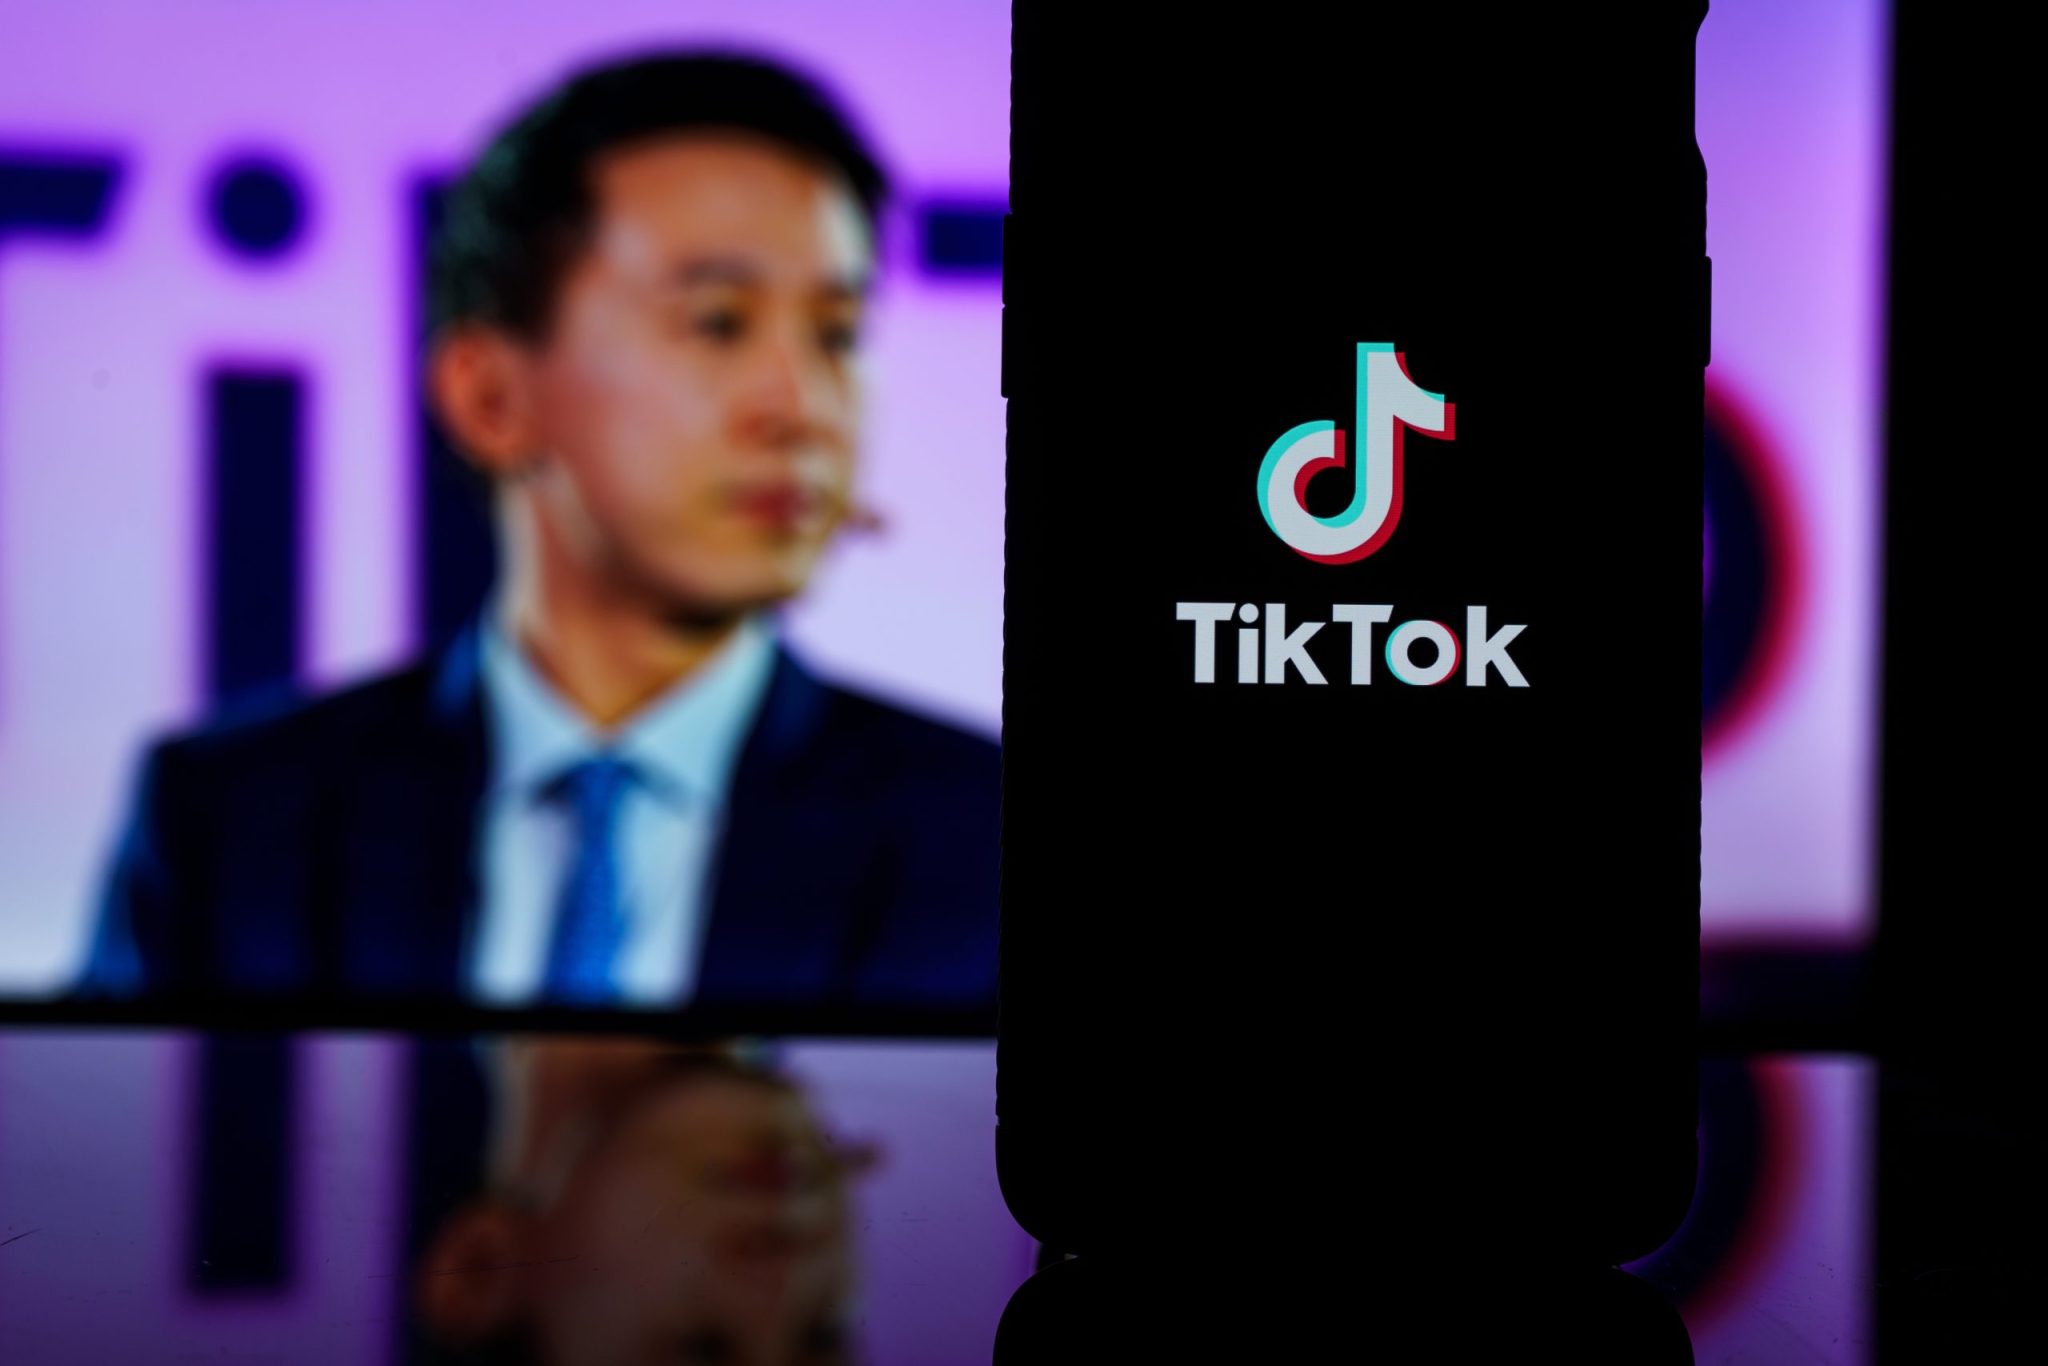 Kaunas, Lithuania - 2023 March 26: TikTok logo on screen and Tik Tok CEO Shou Zi Chew on blurred background. High quality photo